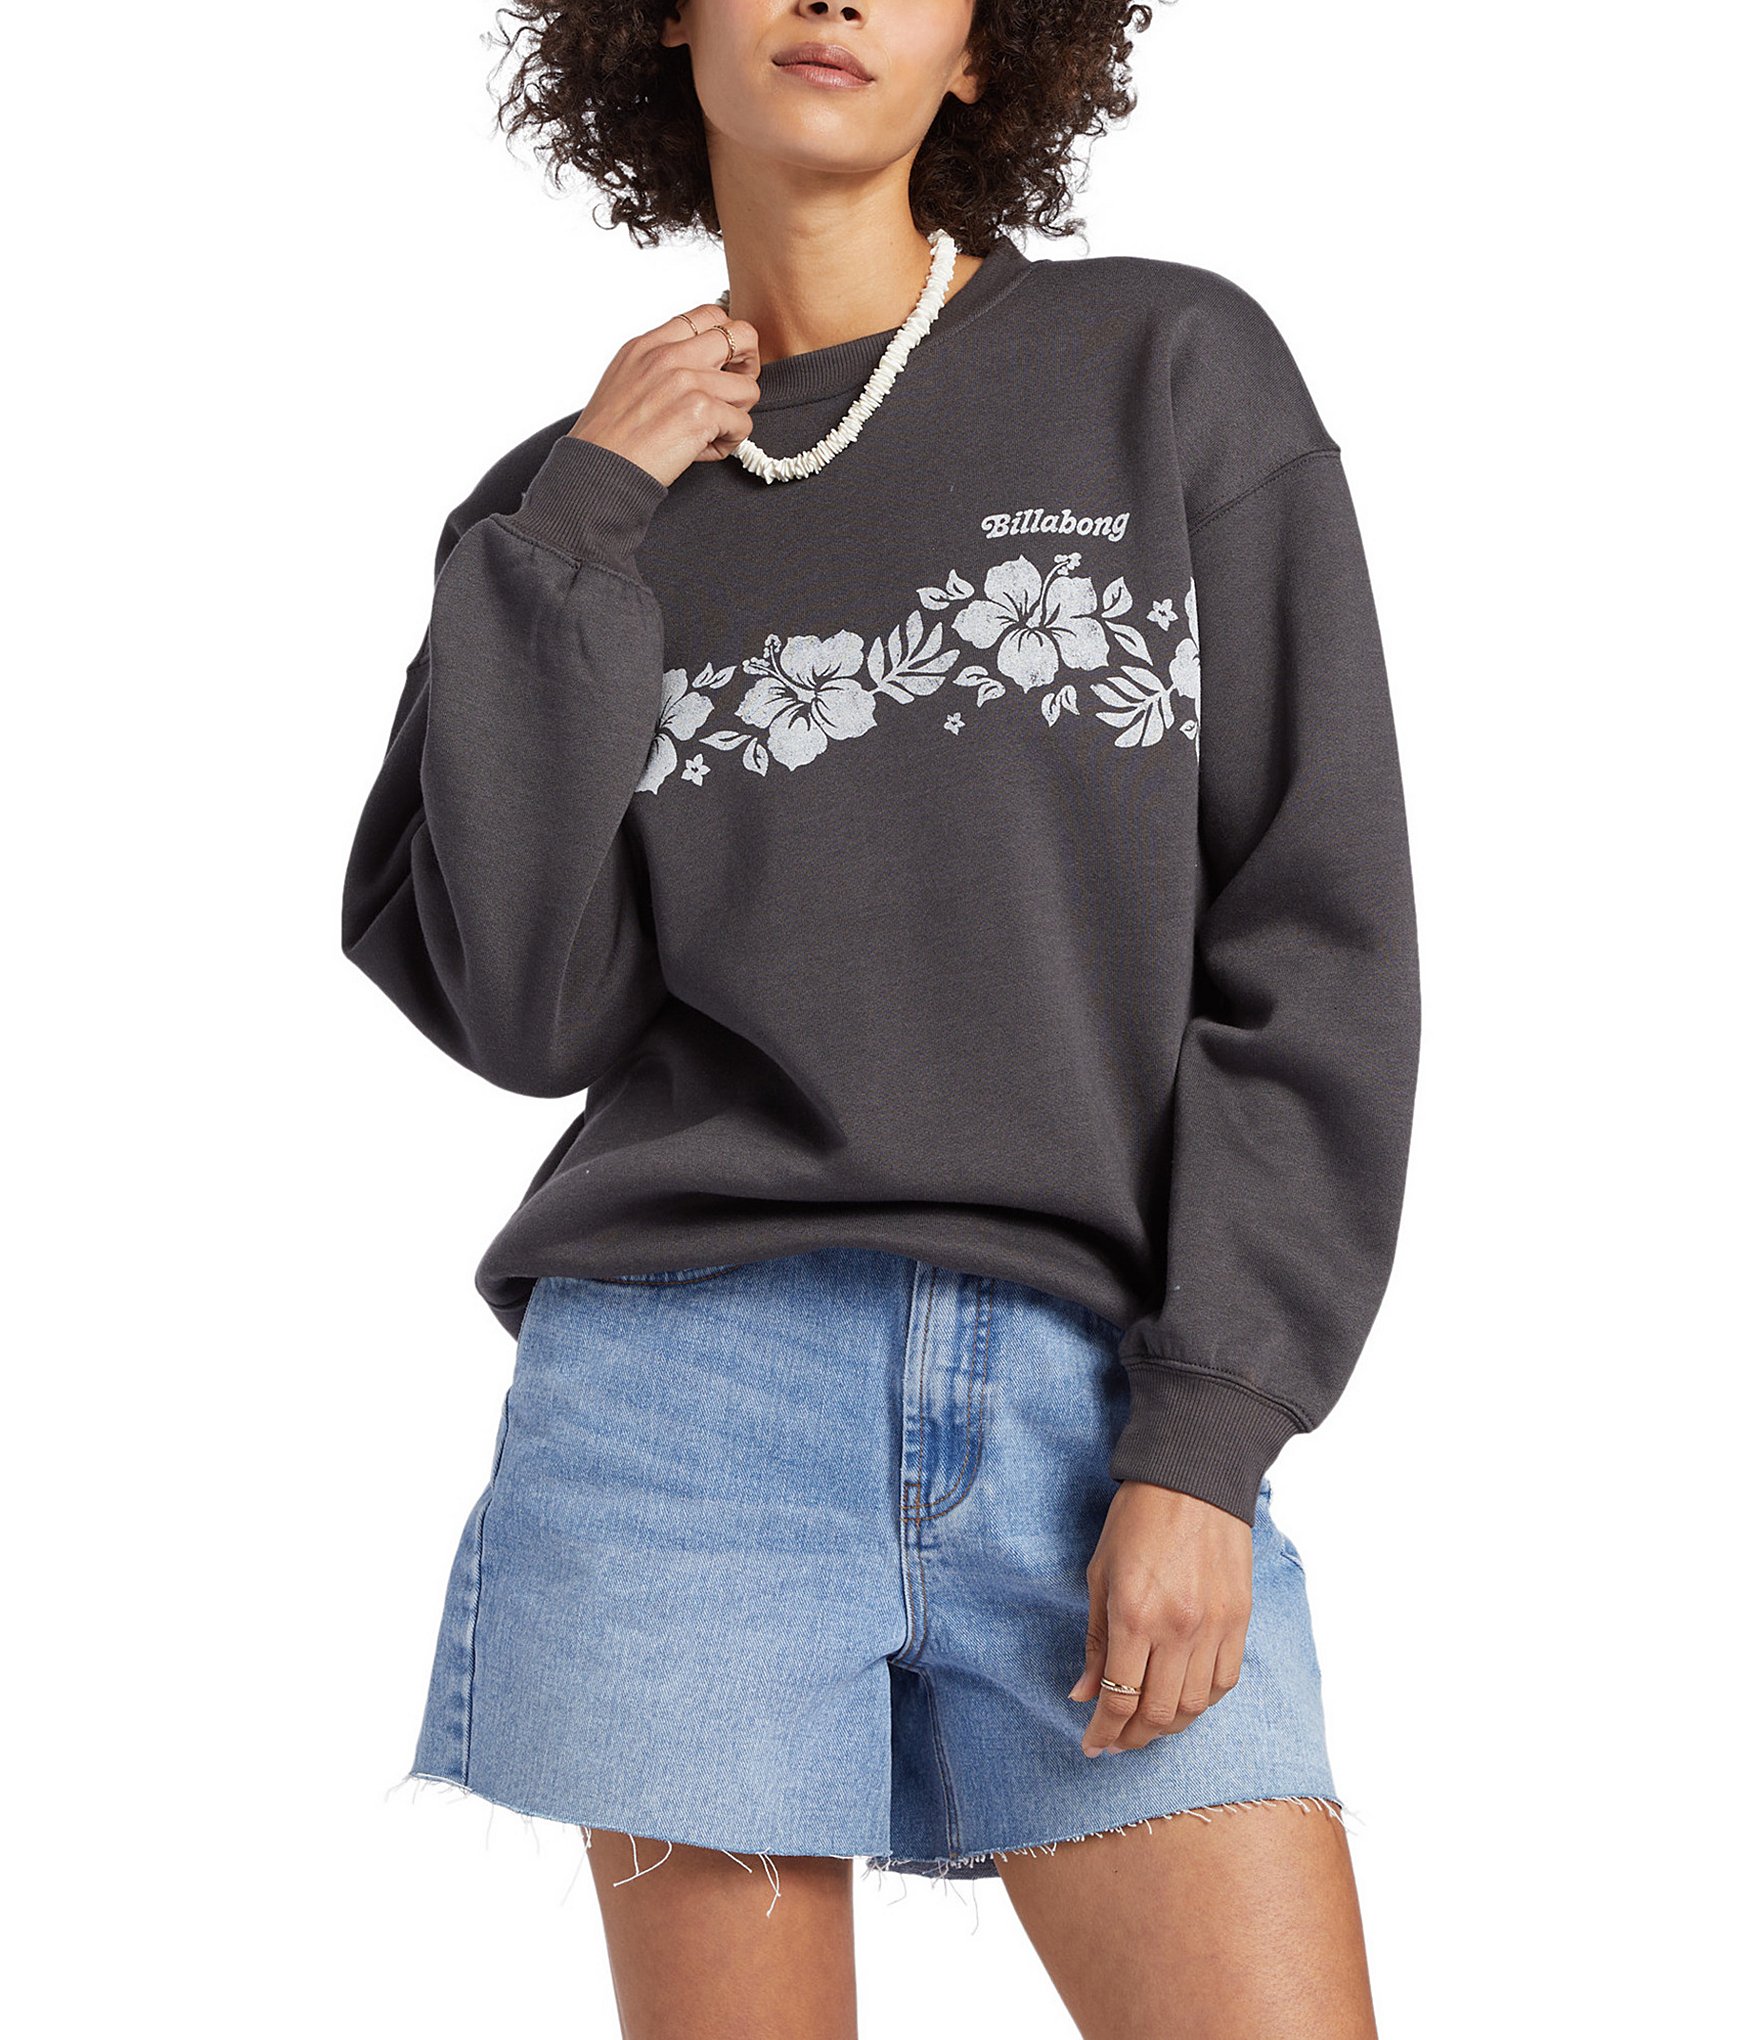 Philcos Mean Girls - Fetch Graphic Sweatshirt